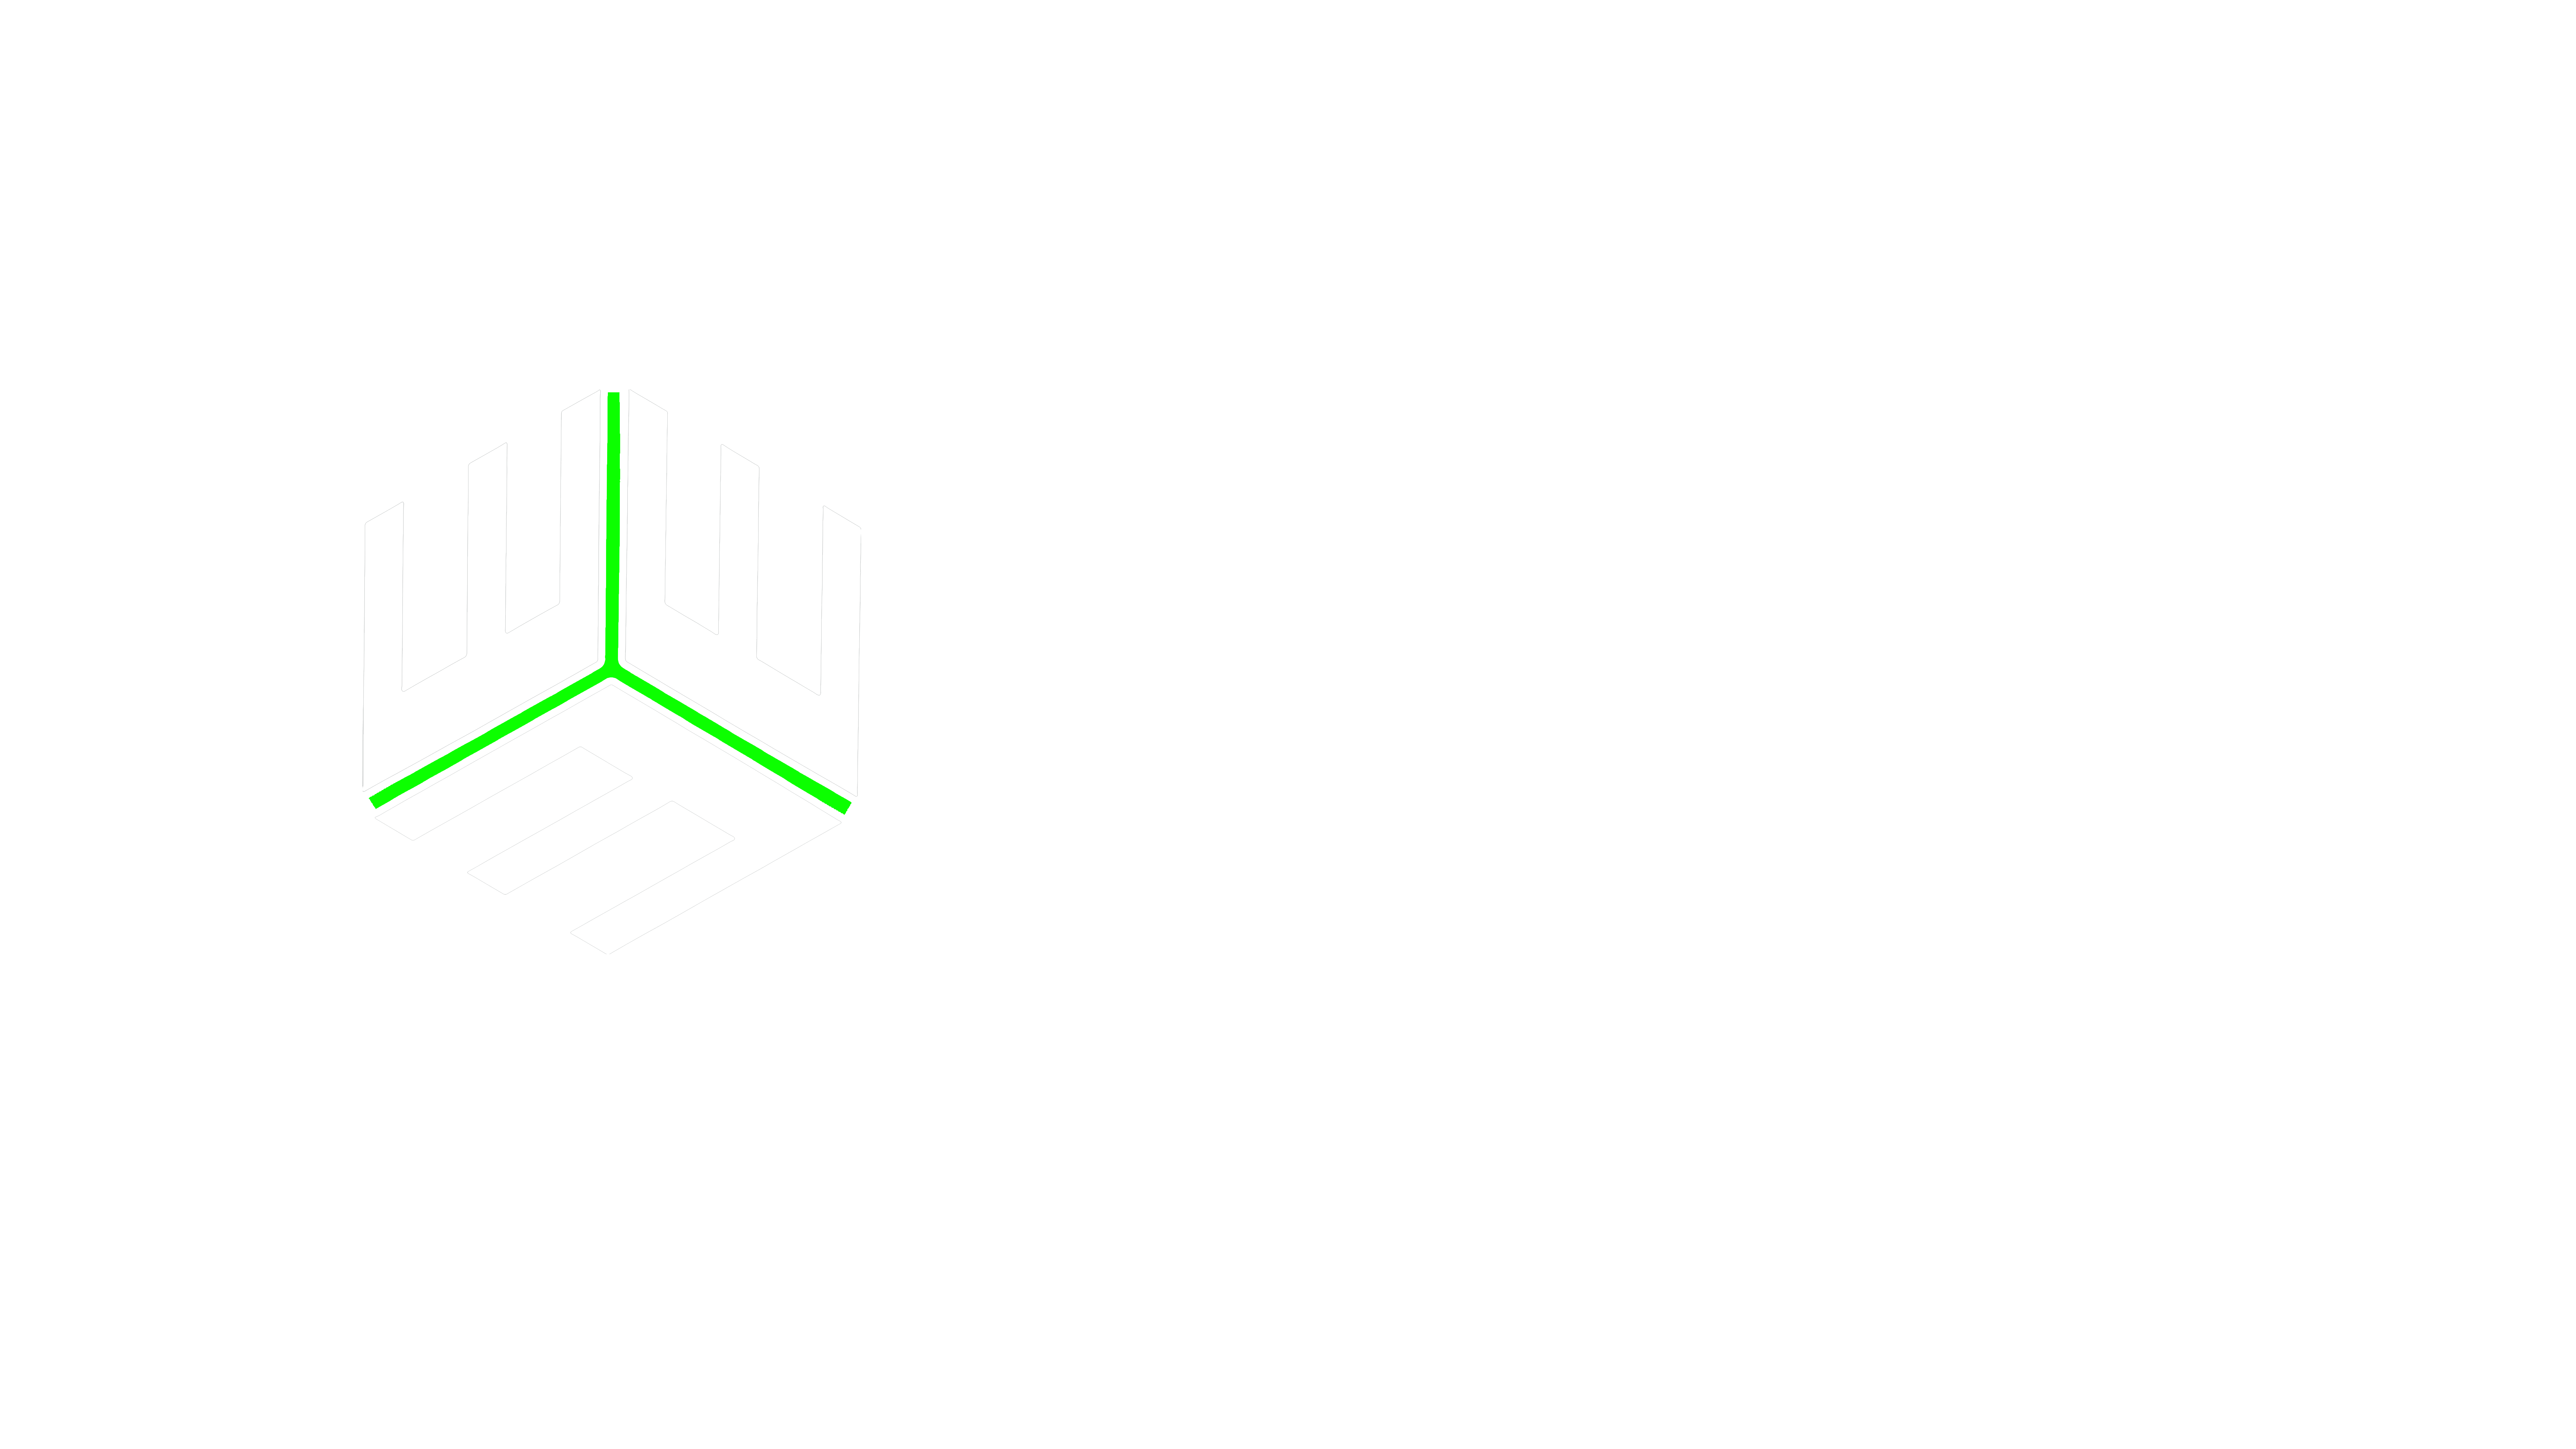 Events & Exhibitions Agency in Dubai